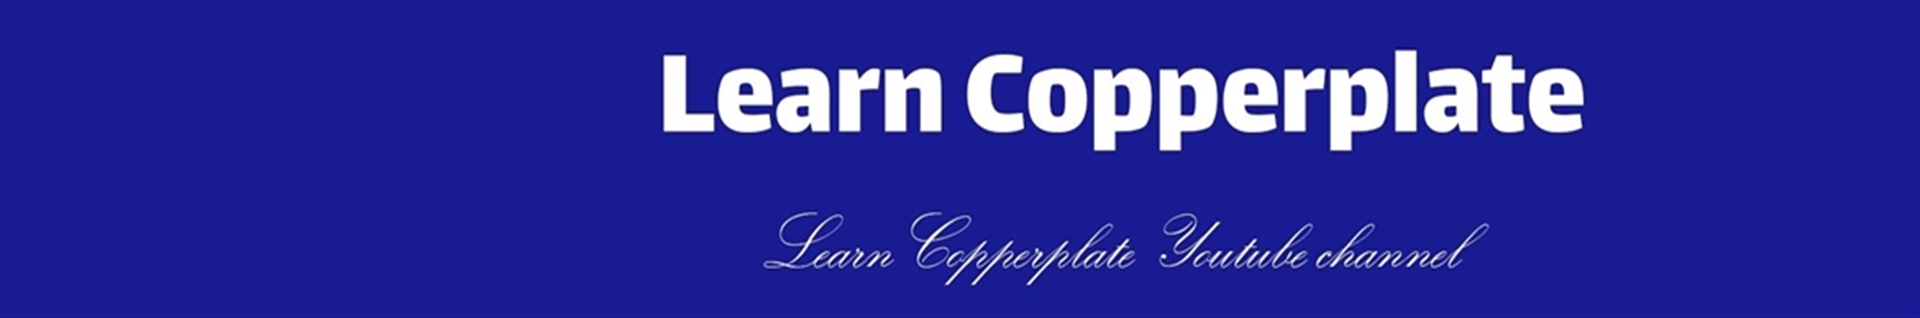 Learn Copperplate